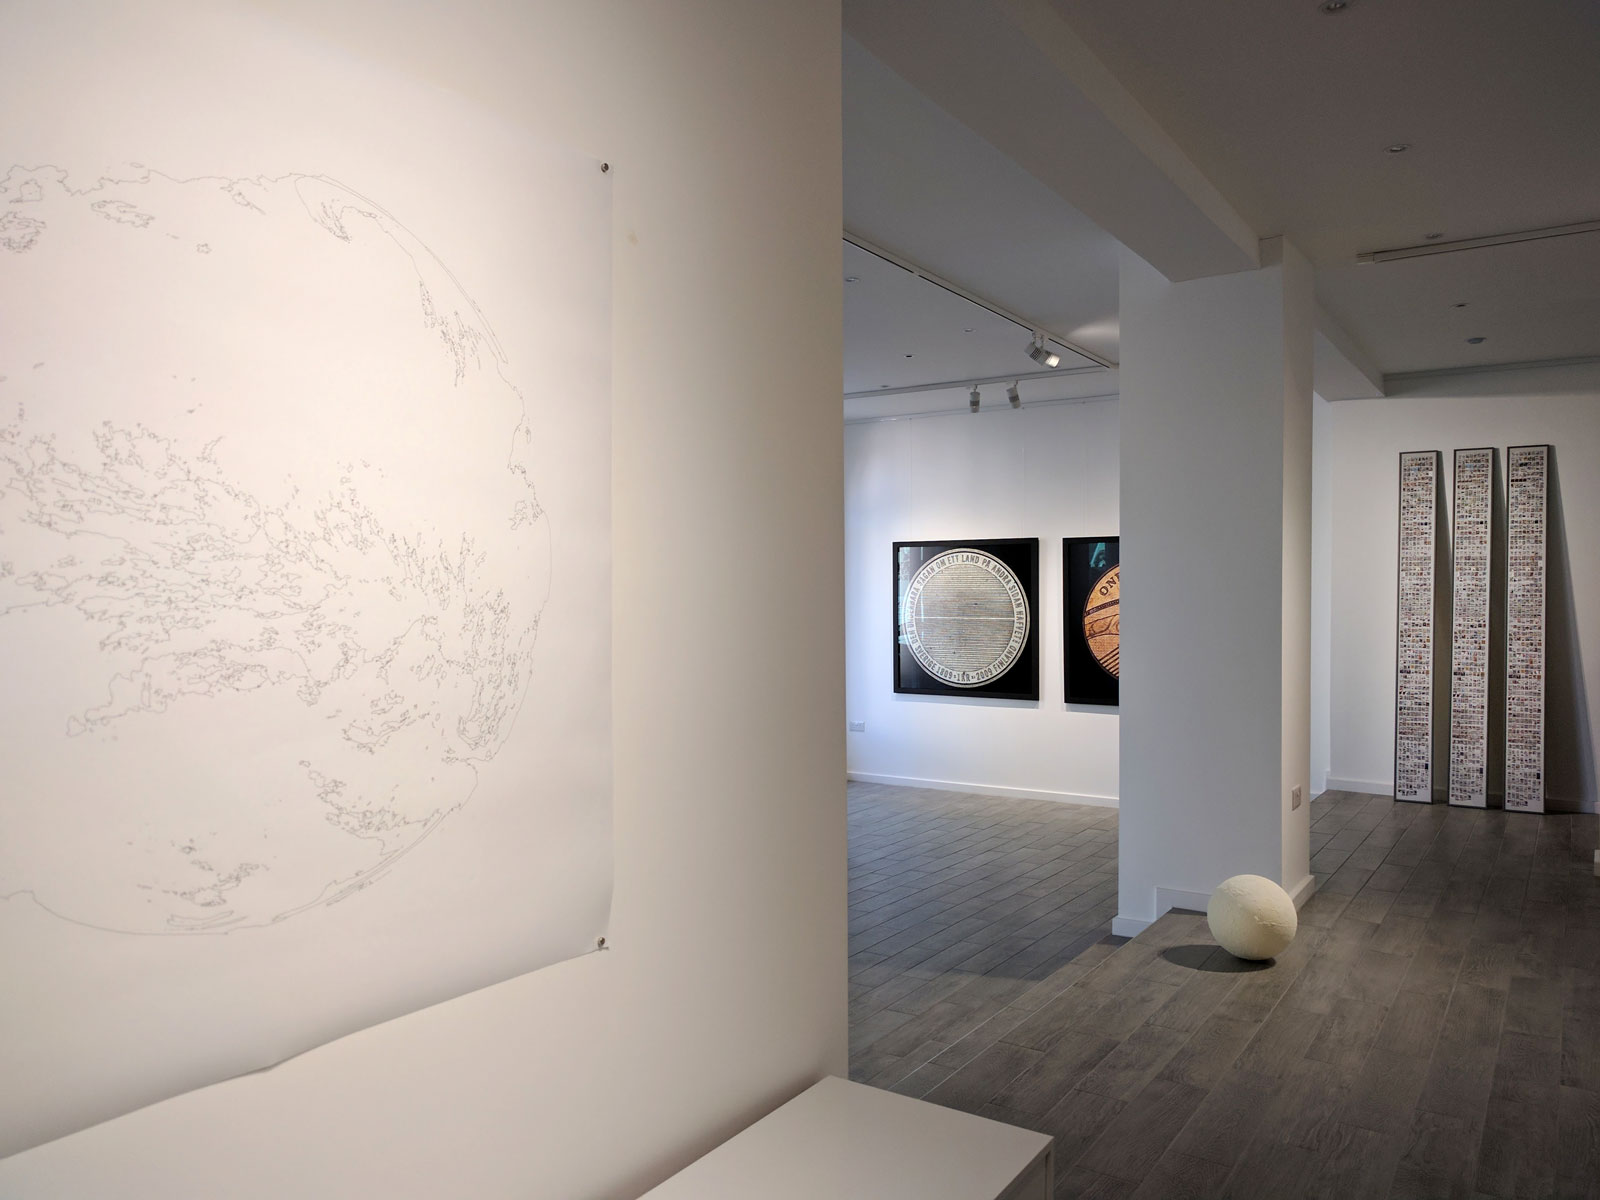 A Planetary Order (Terrestrial Cloud Globe), Argentea Gallery, 2017